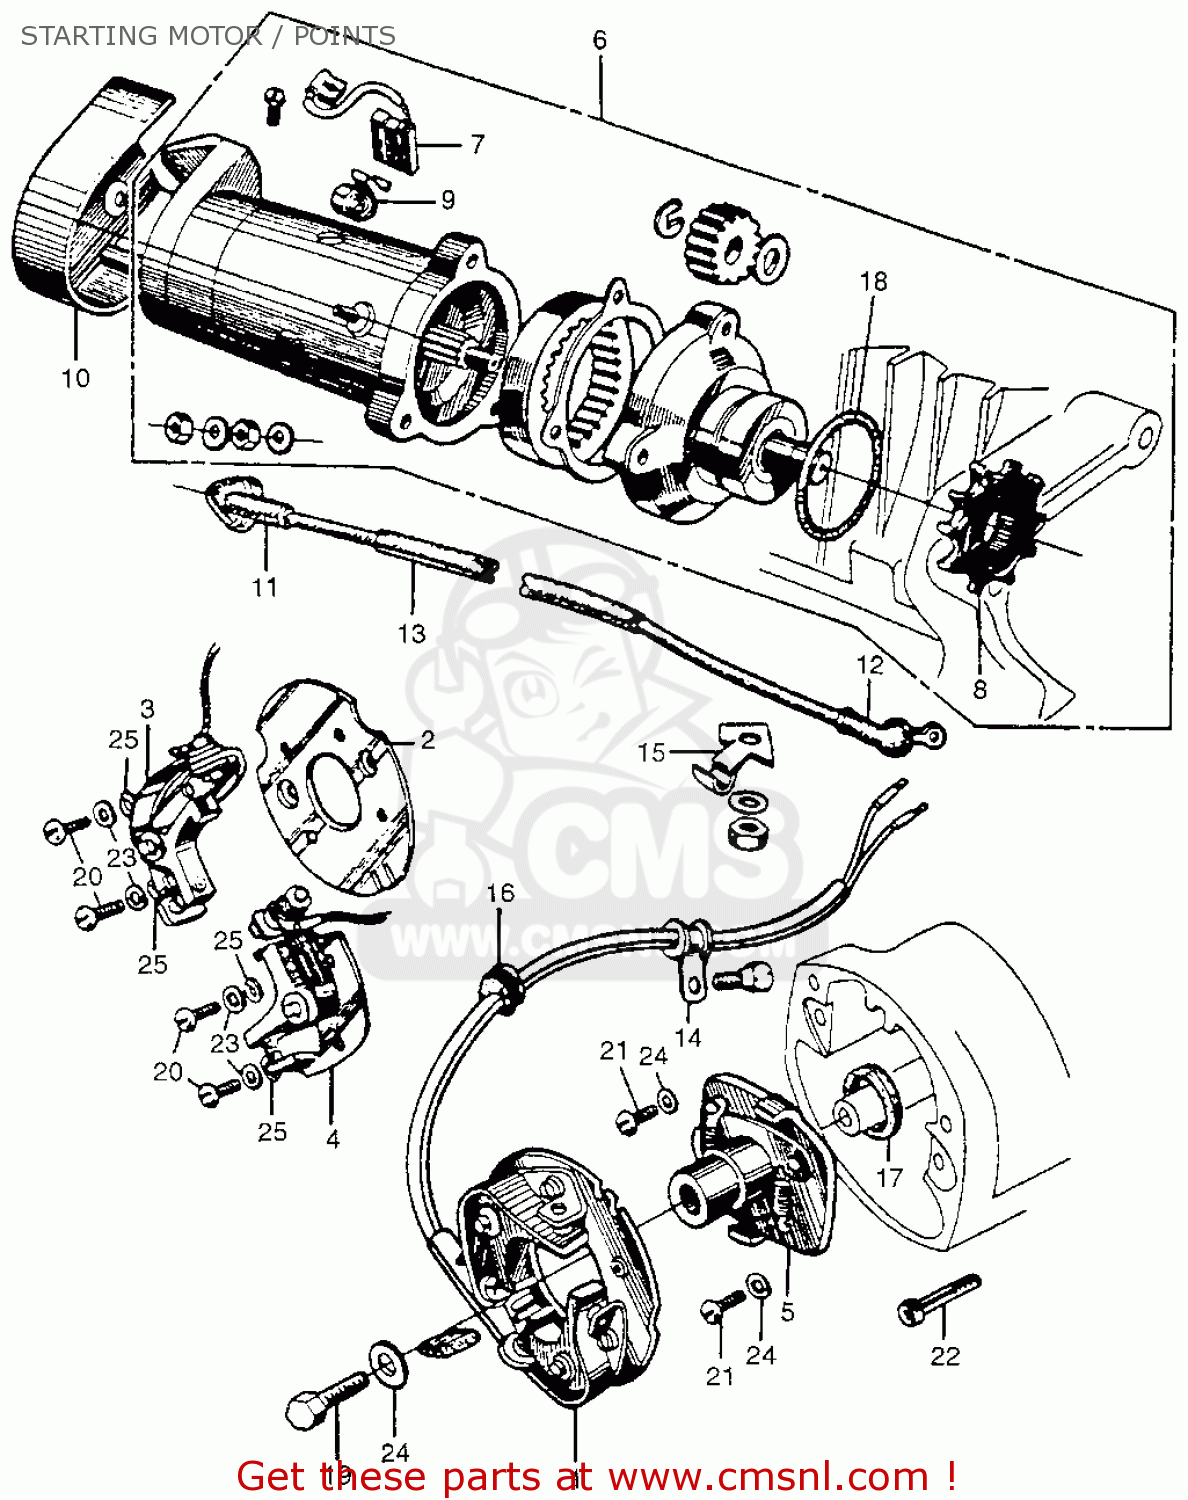 1972 Honda Cb450 Parts Diagram | hobbiesxstyle